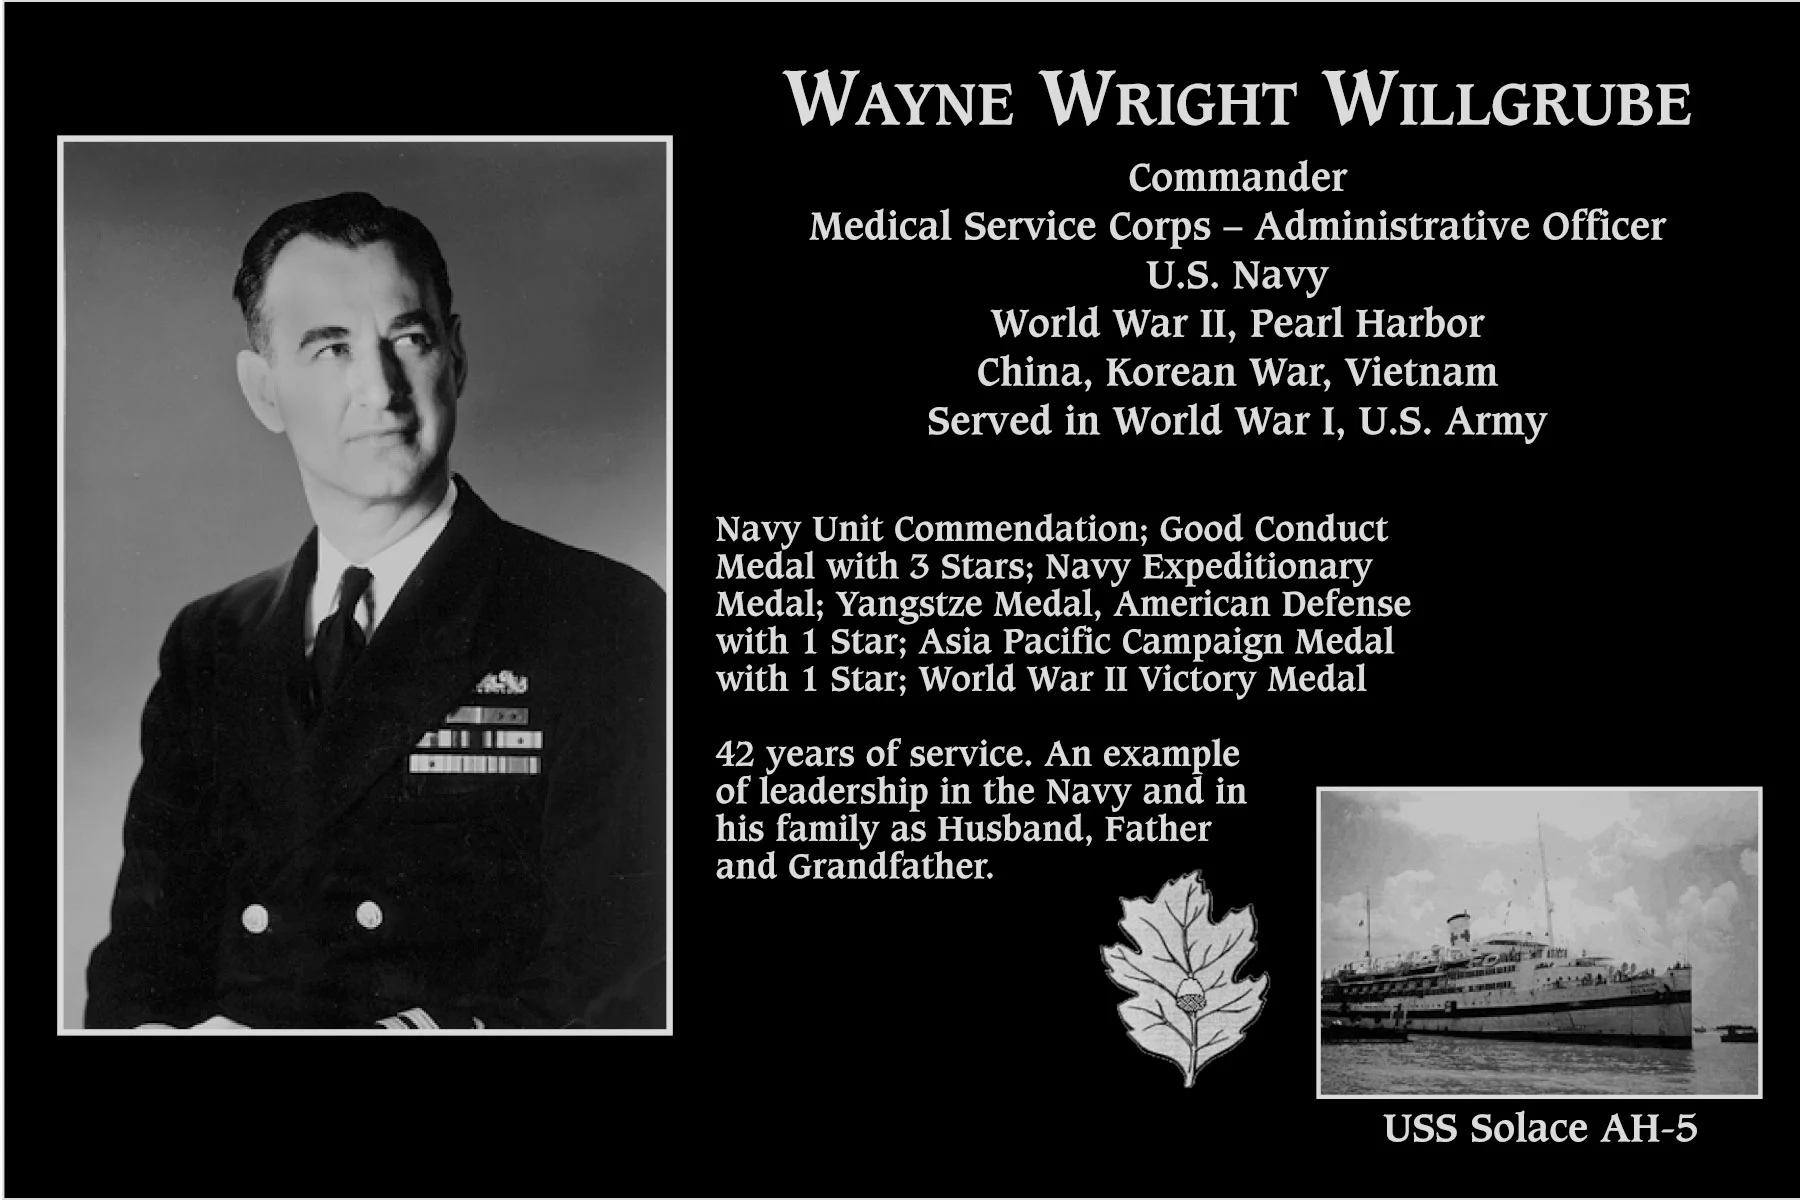 Wayne Wright Willgrube